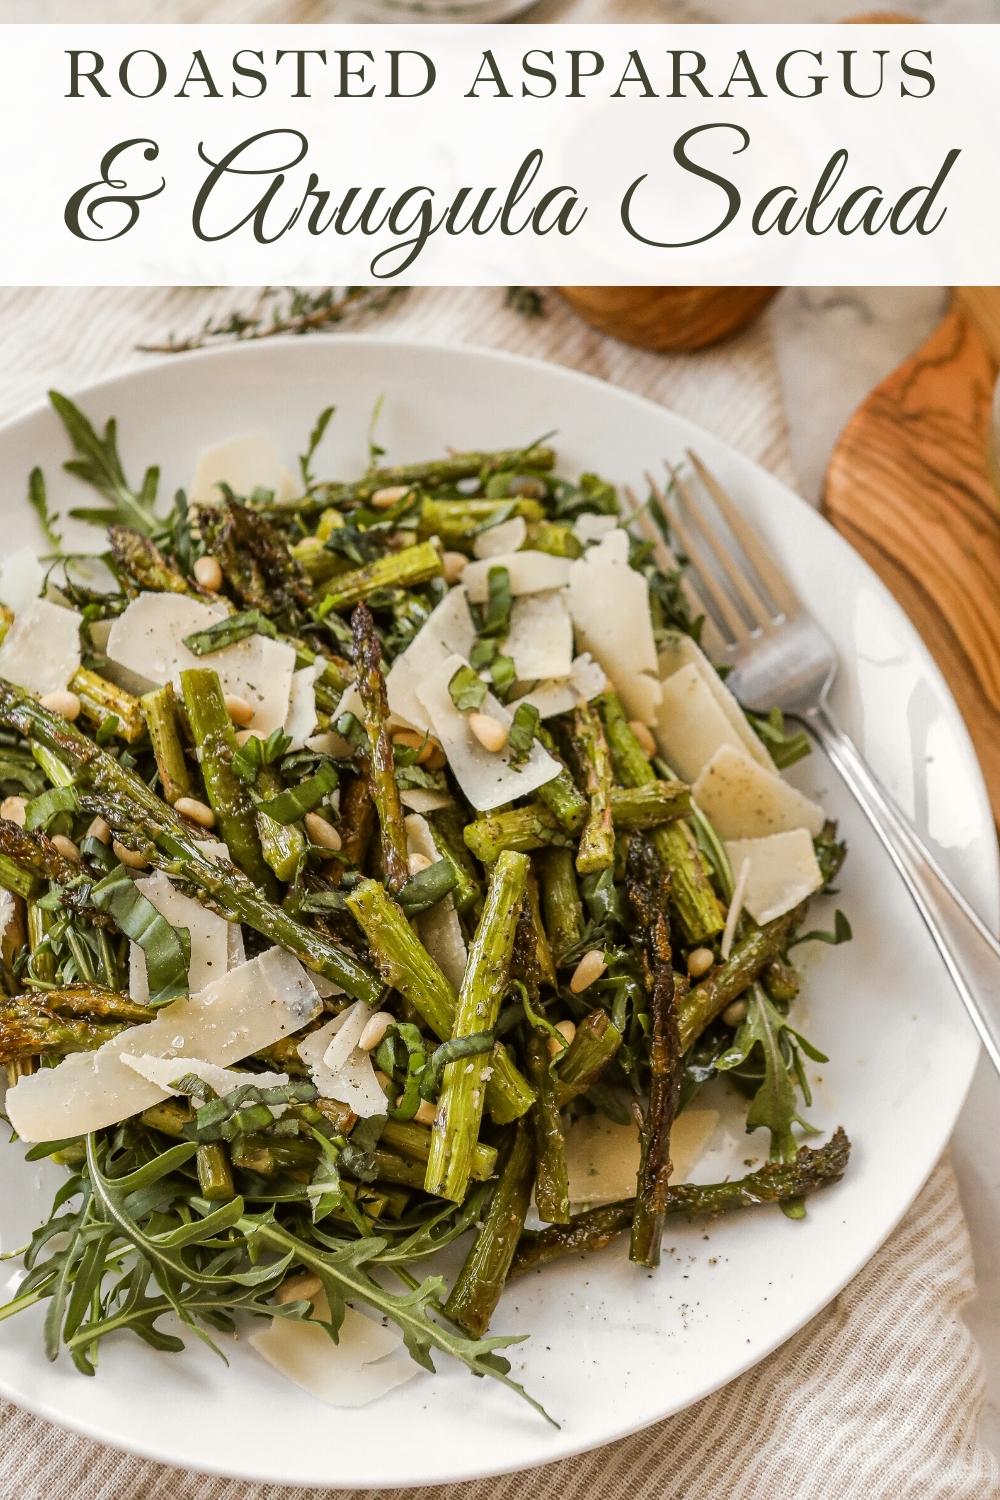 Roasted Asparagus salad recipe with arugula